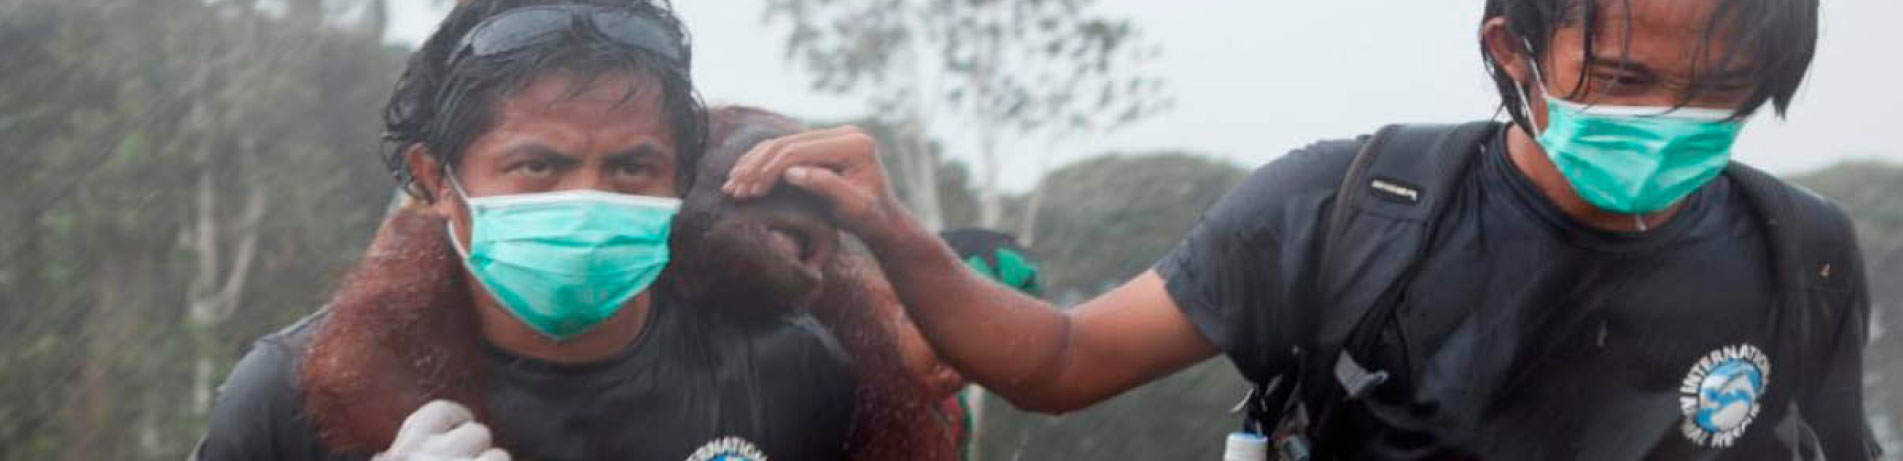 International Animal Rescue workers rescue an Orangutan